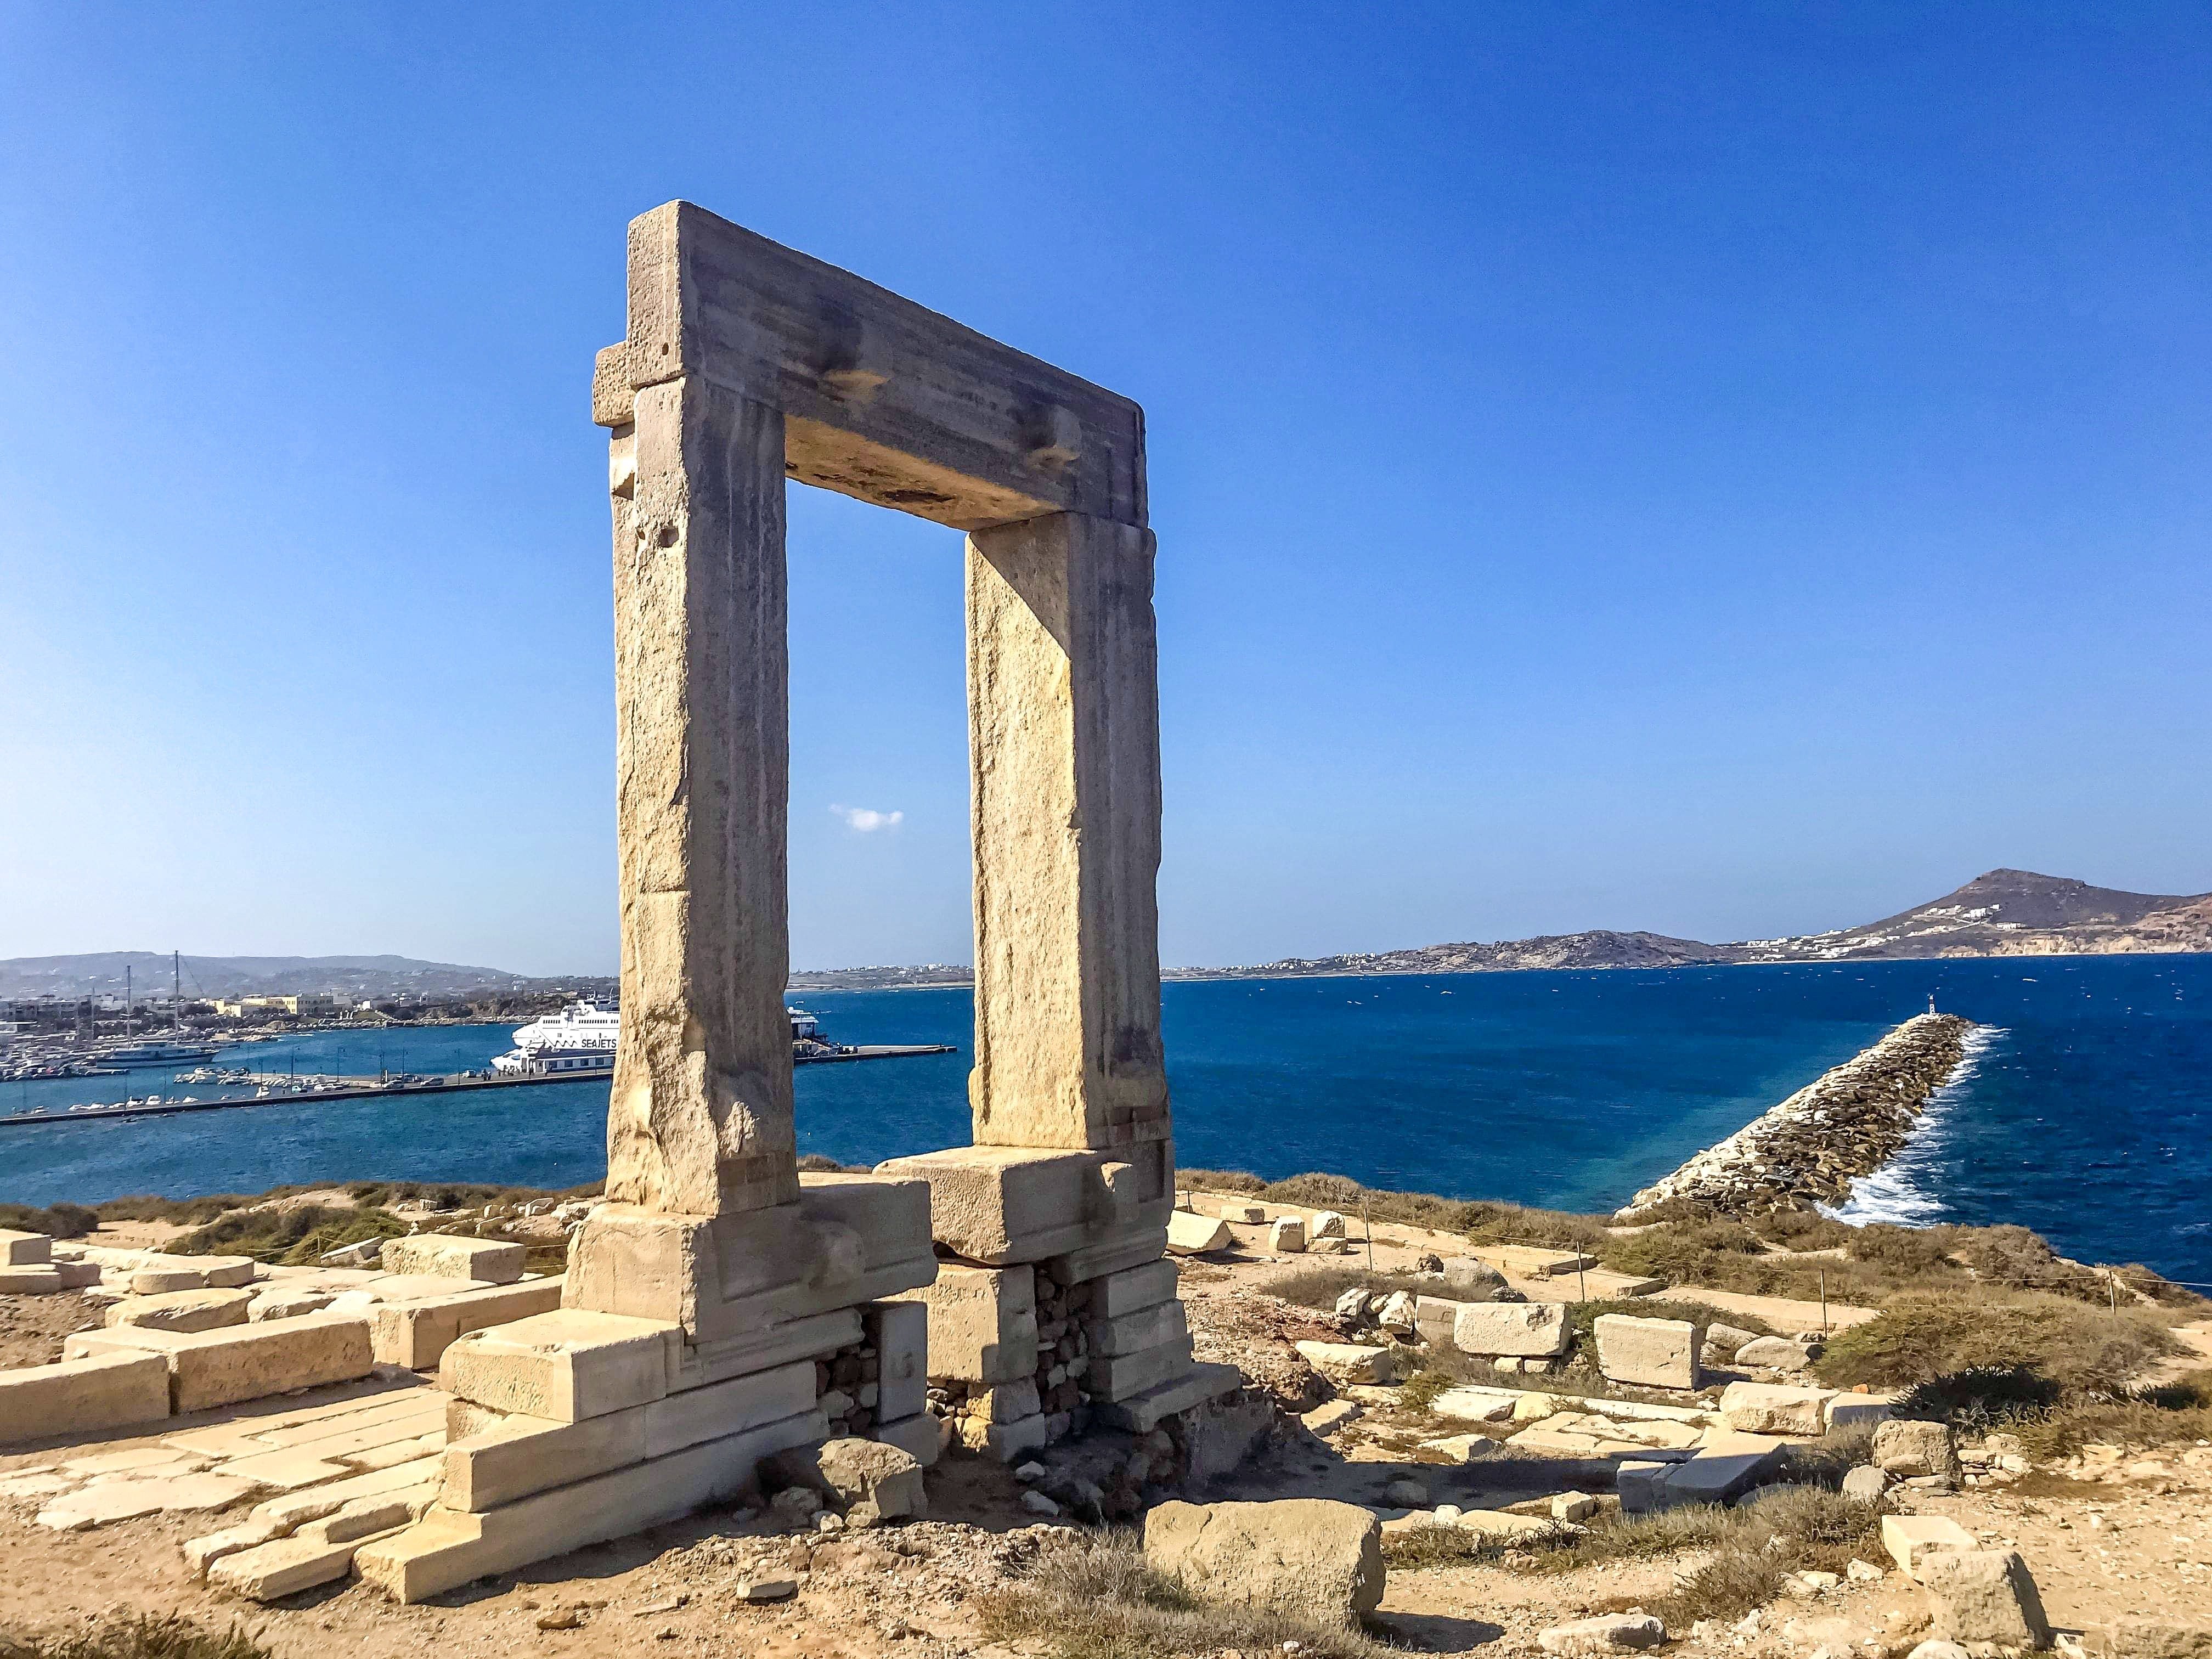 naxos as a tourist destination